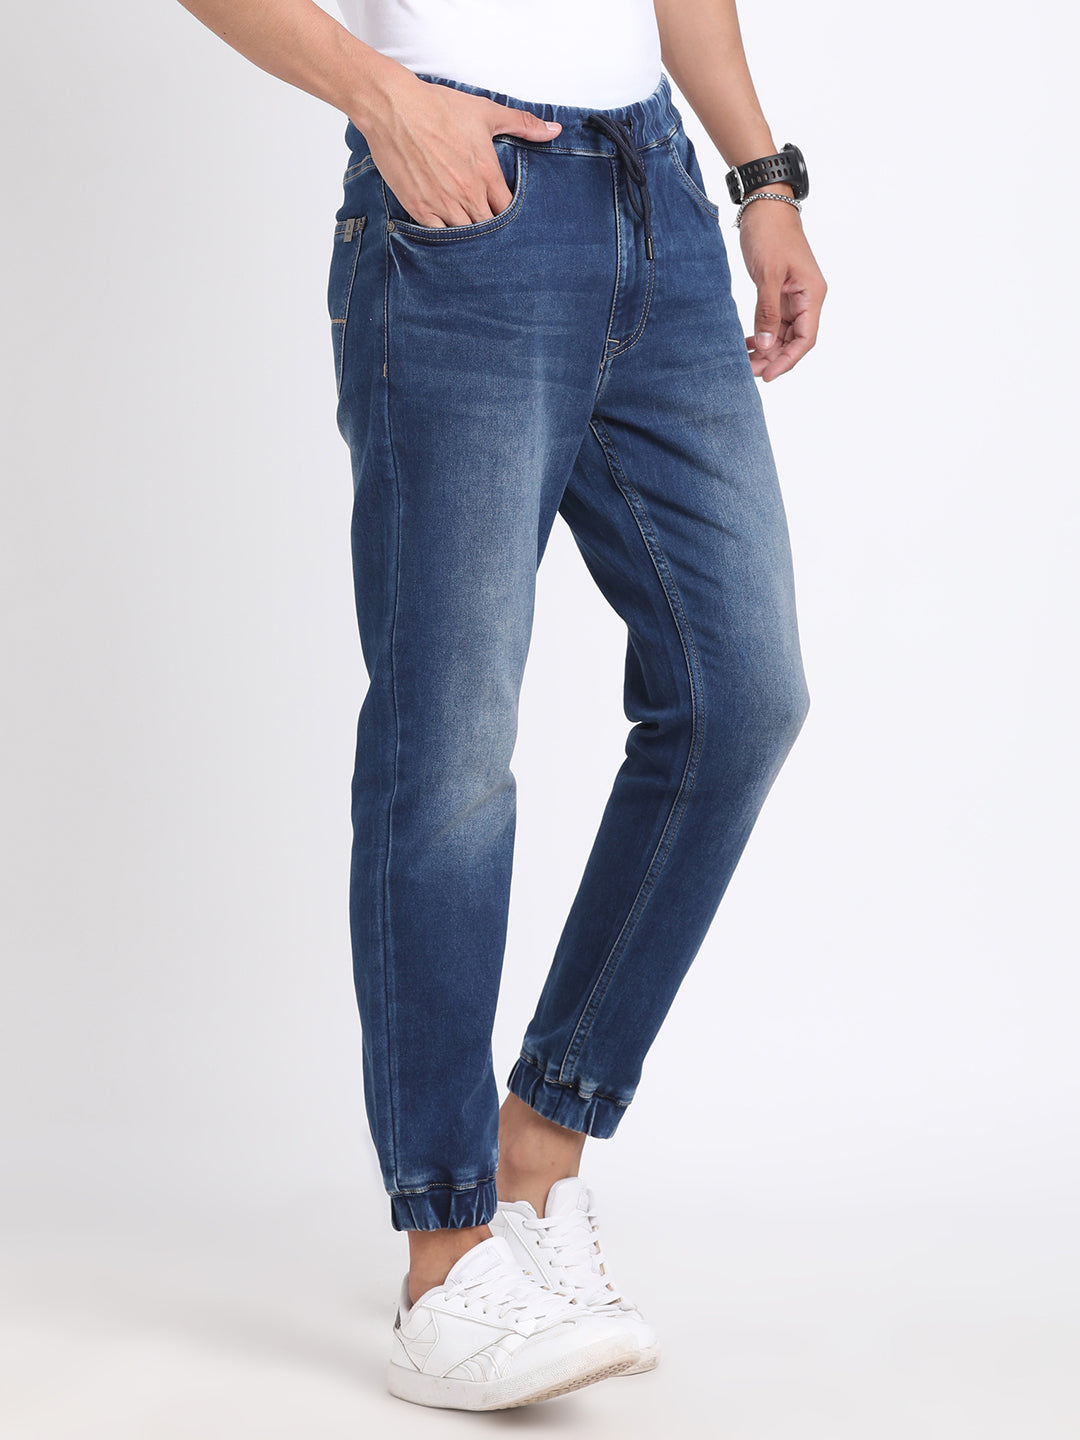 Cotton Stretch Navy Blue Plain Flat Front Casual Jogger Jeans